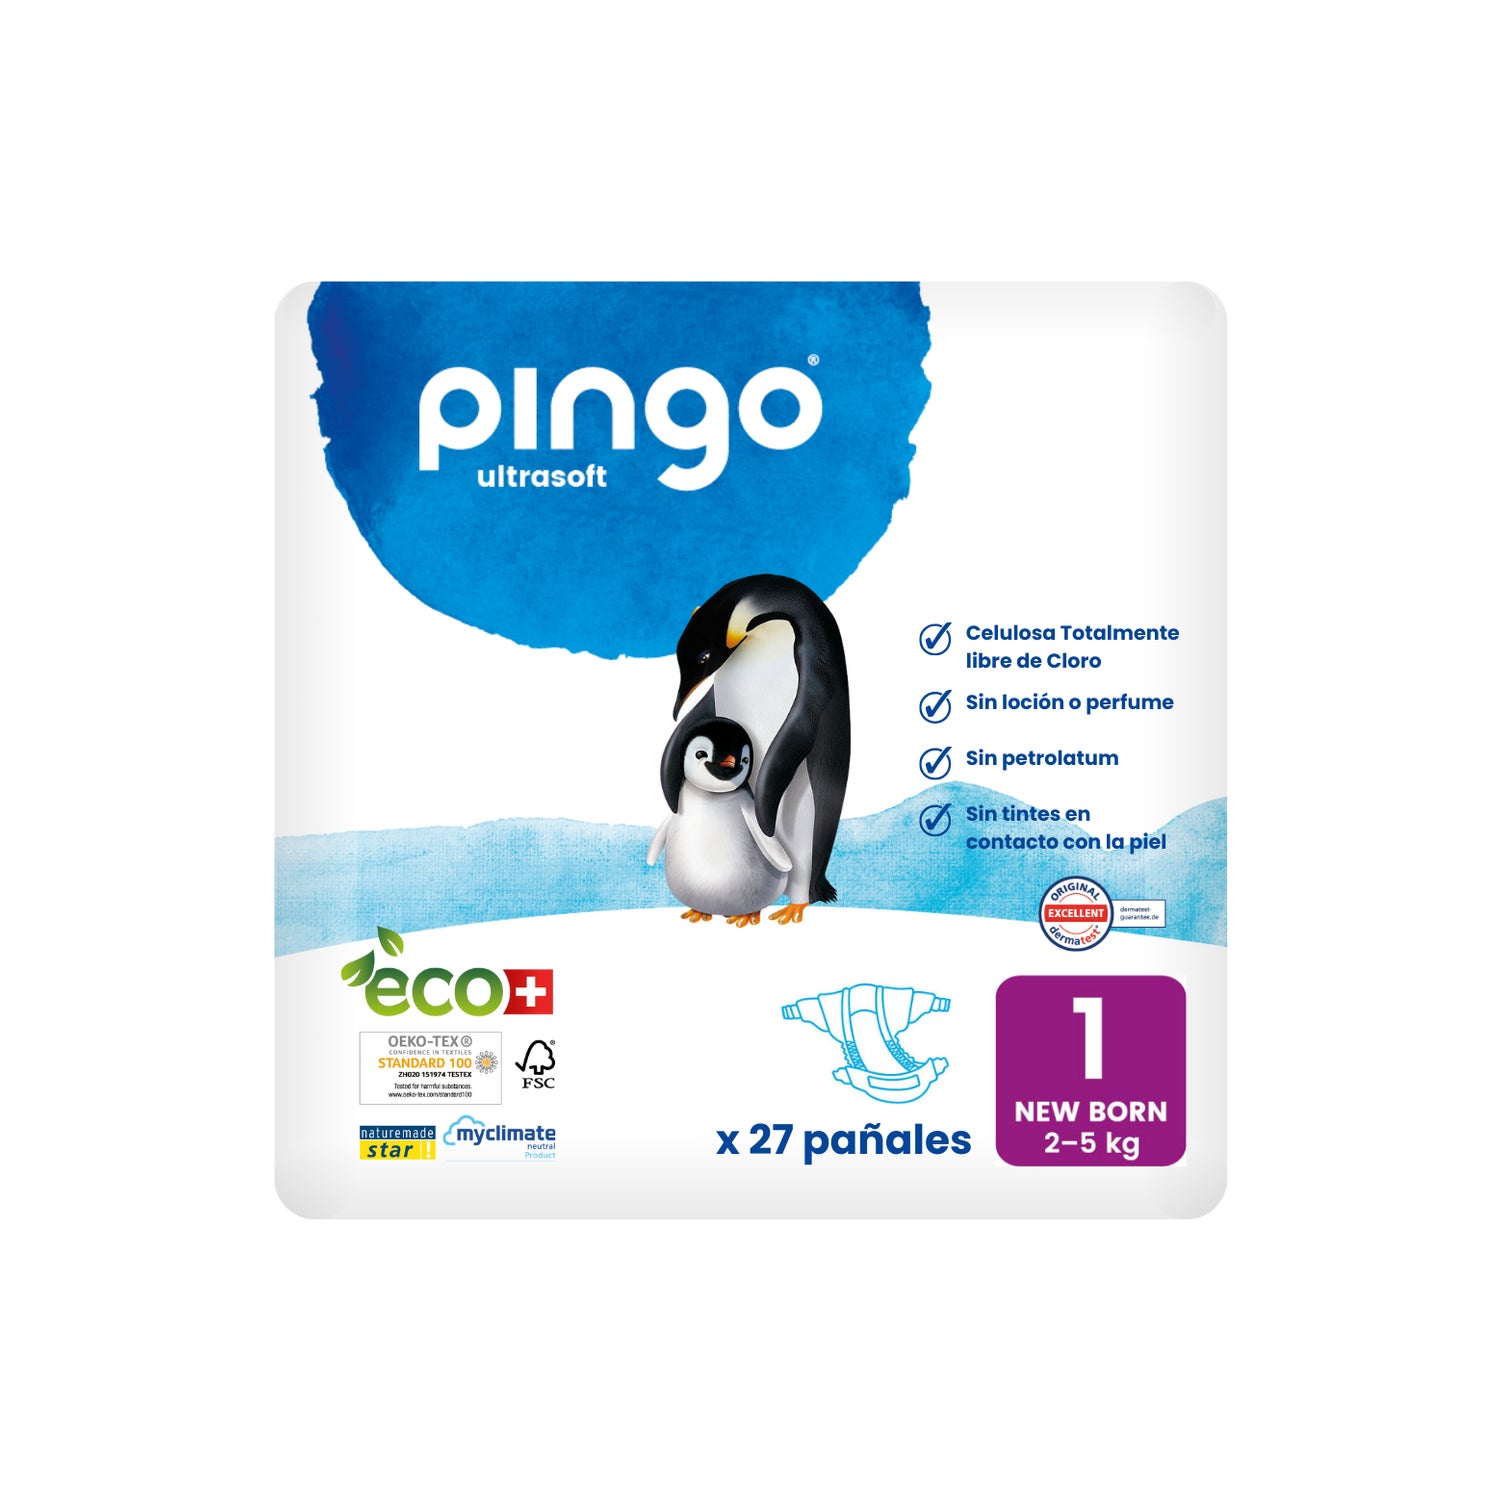 Diapers Pingo Junior T5 36 Diapers